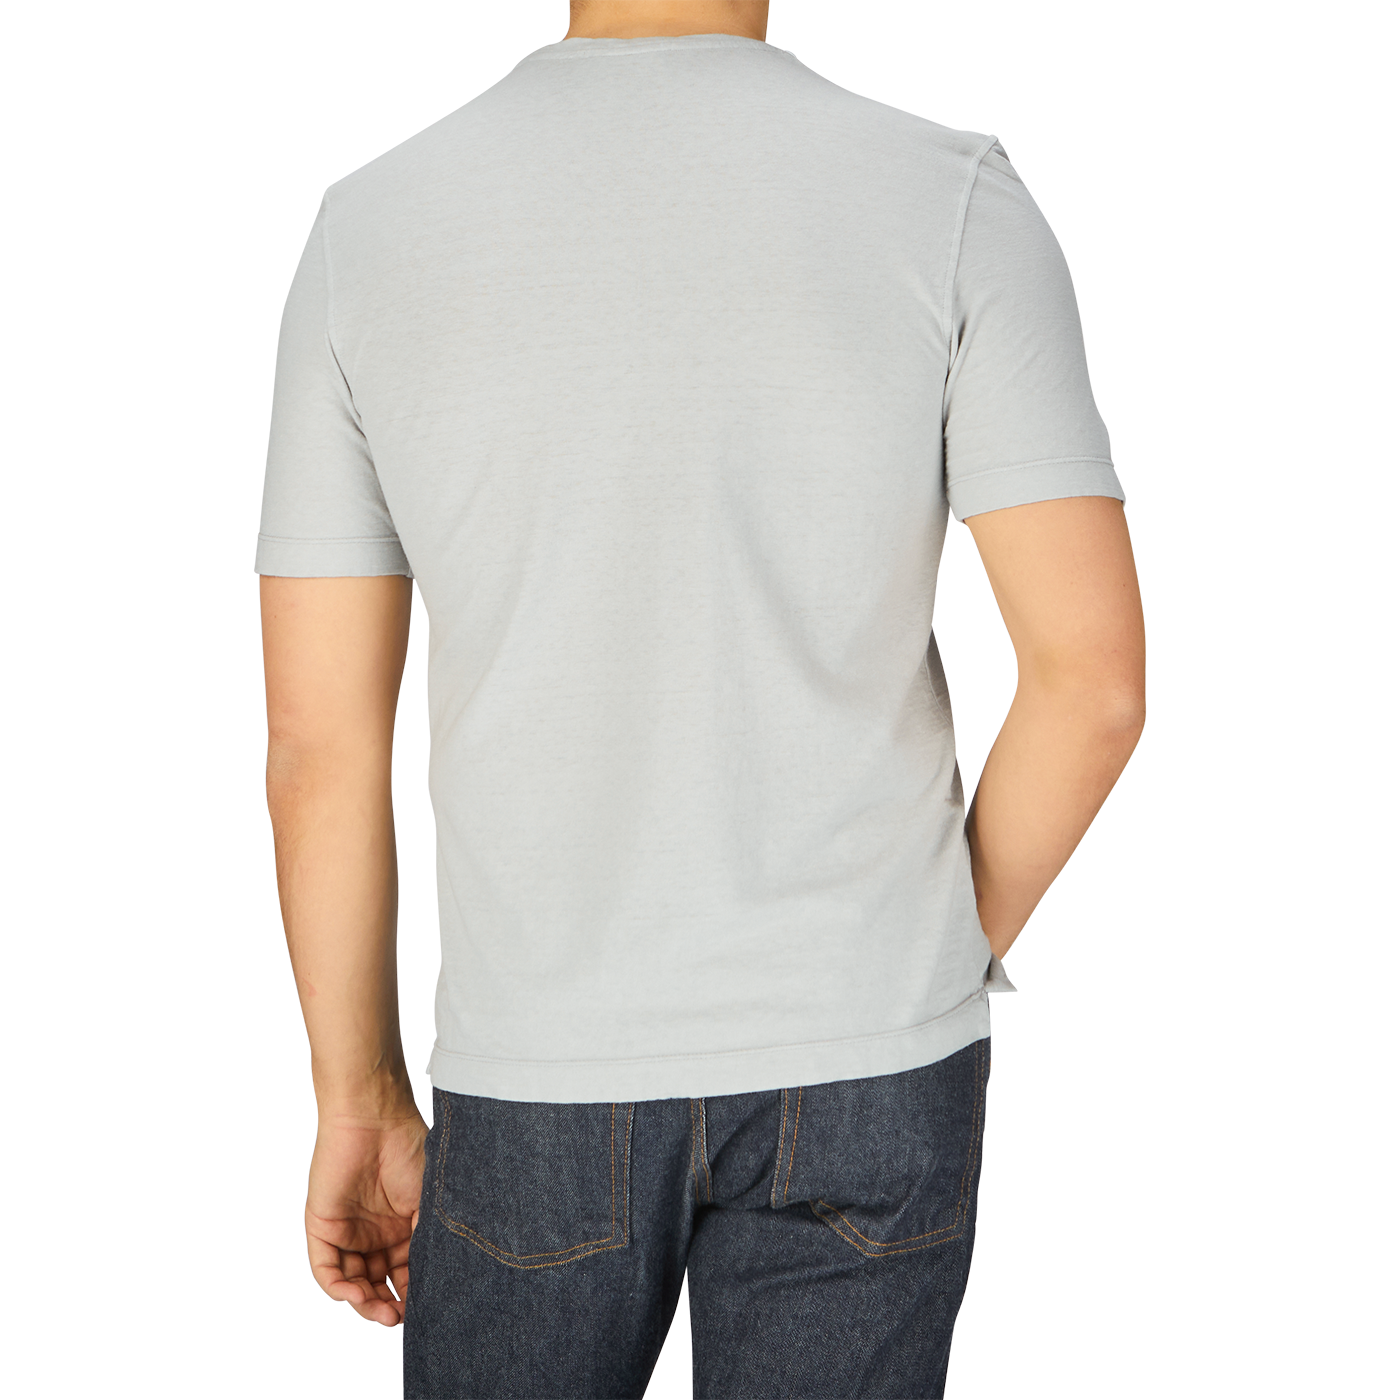 A man wearing a Drumohr Light Grey Cotton Linen T-Shirt in Italy.